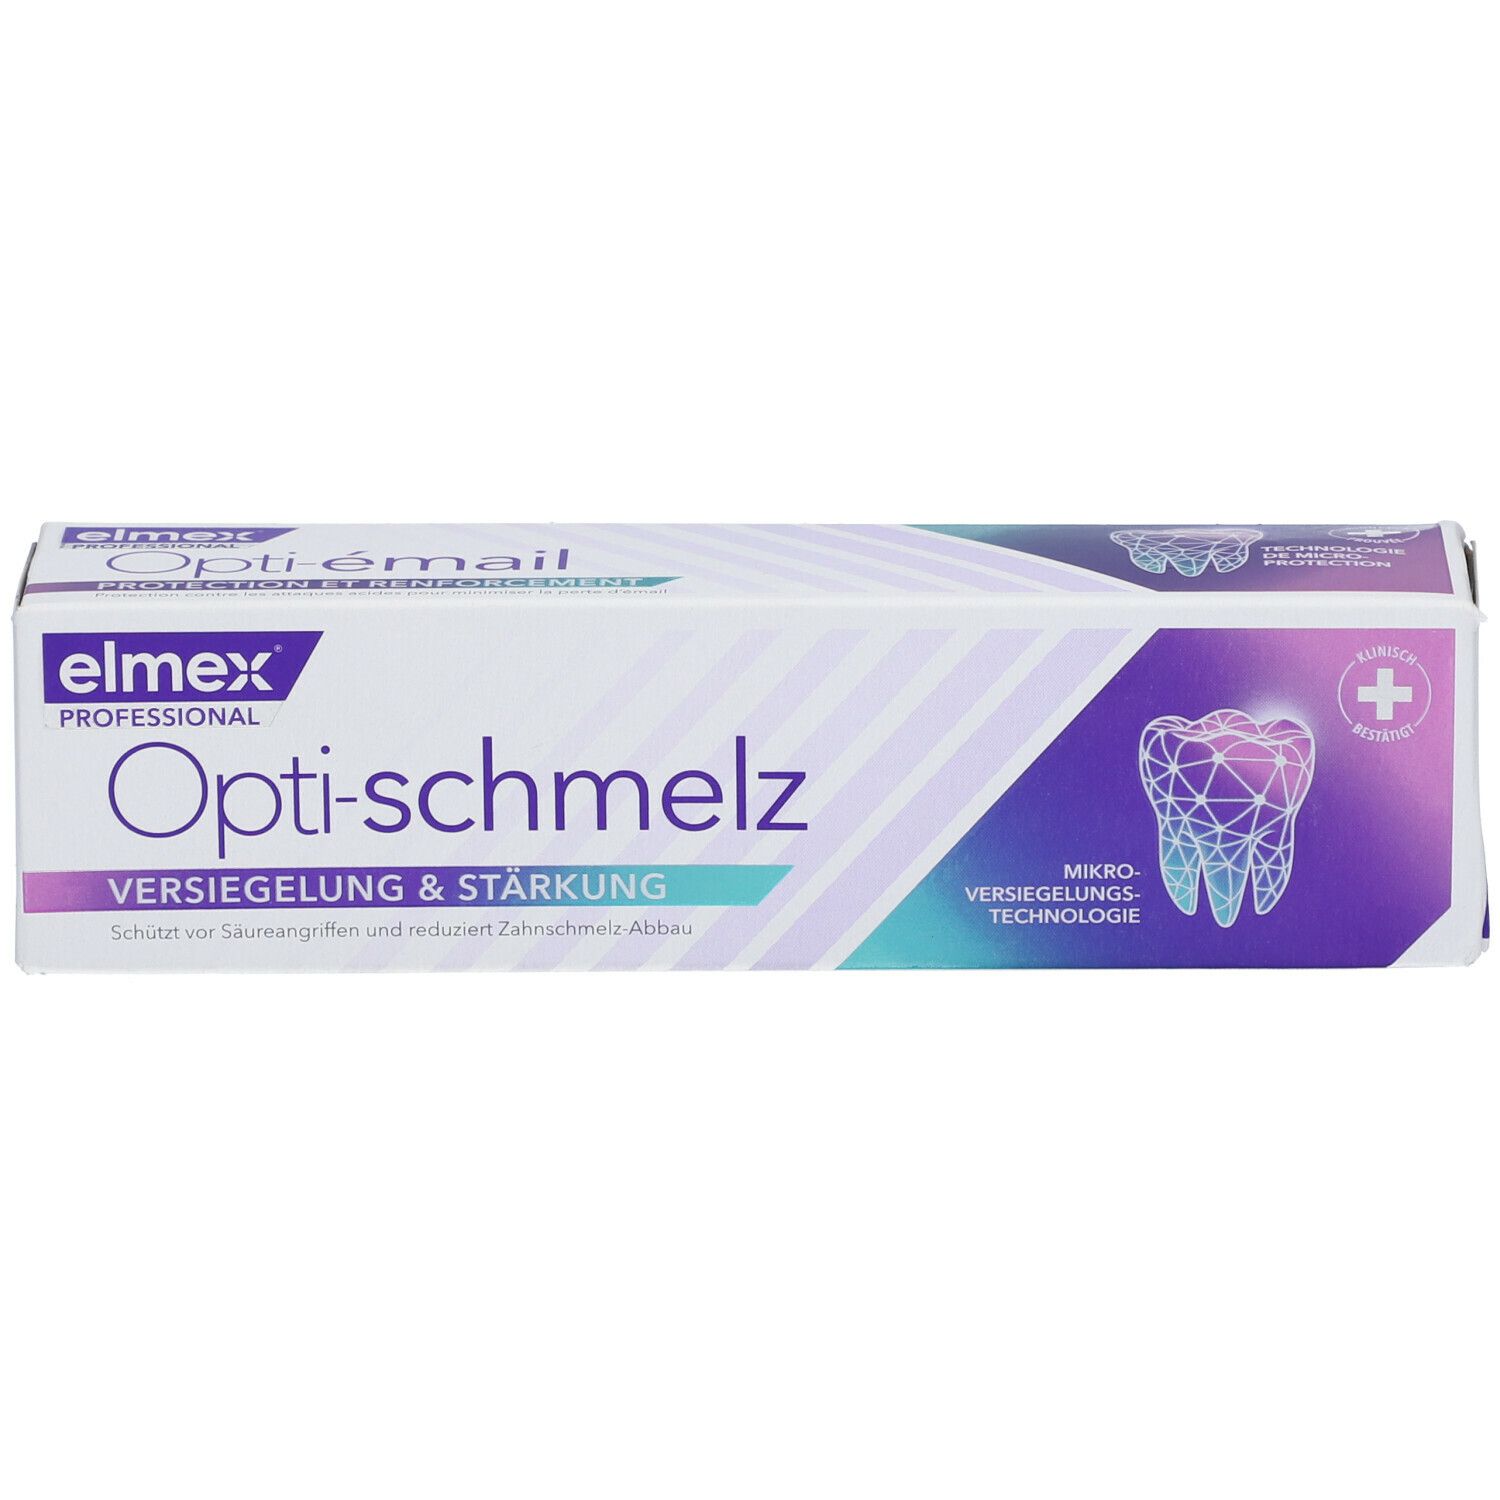 elmex Zahnschmelzschutz Professional™ Zahnpasta